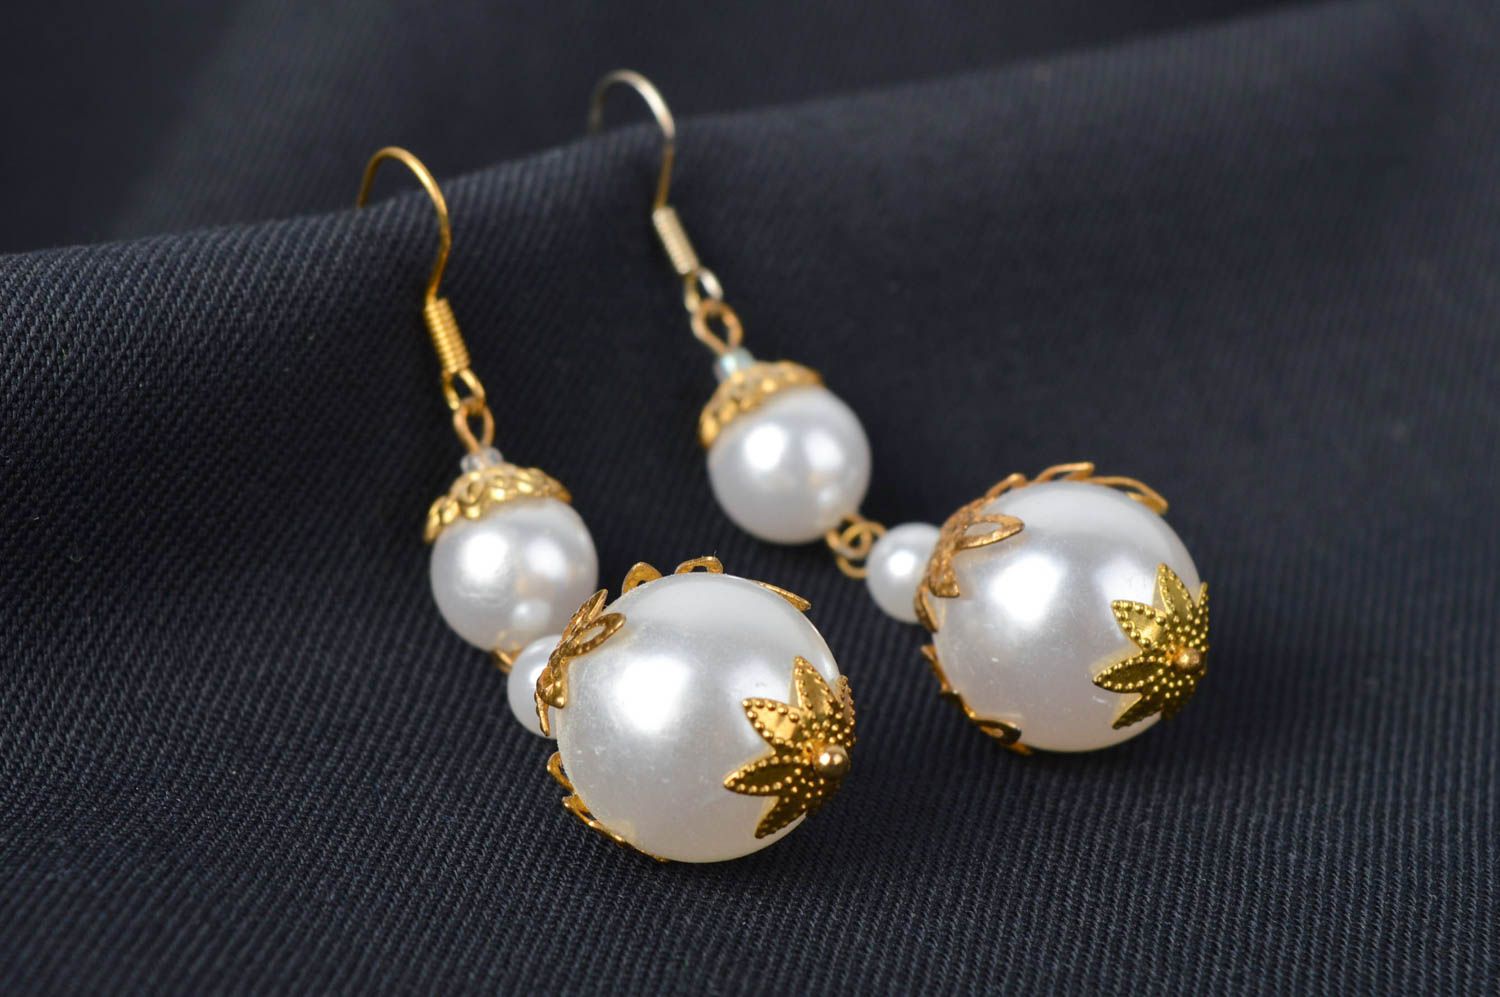 Handmade earrings designer jewelry dangling earrings fashion accessories photo 1